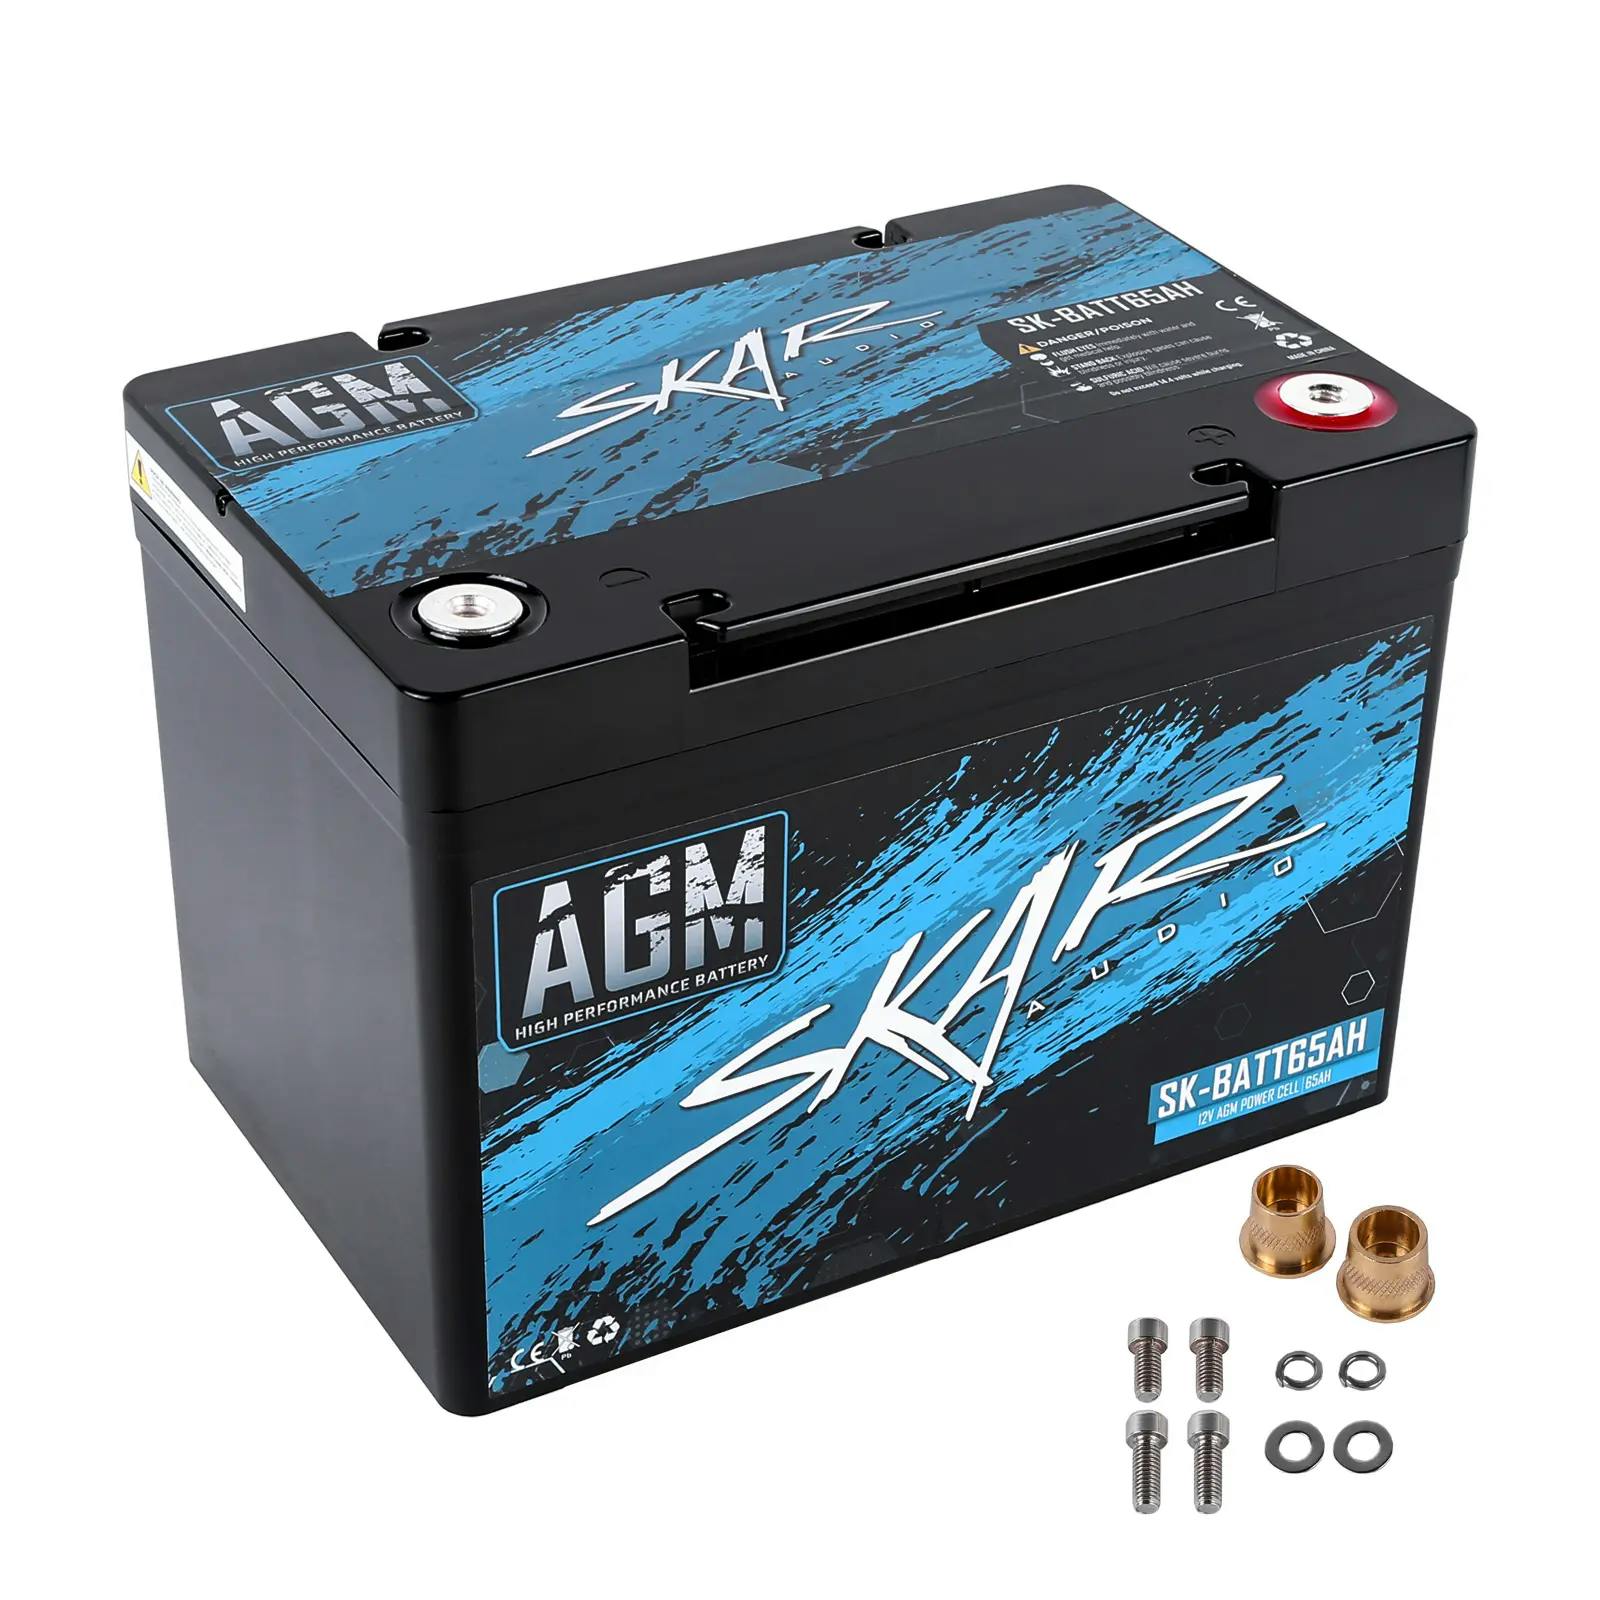 Featured Product Photo 1 for SK-BATT65AH | 12V 65Ah AGM High Performance Car Audio Battery